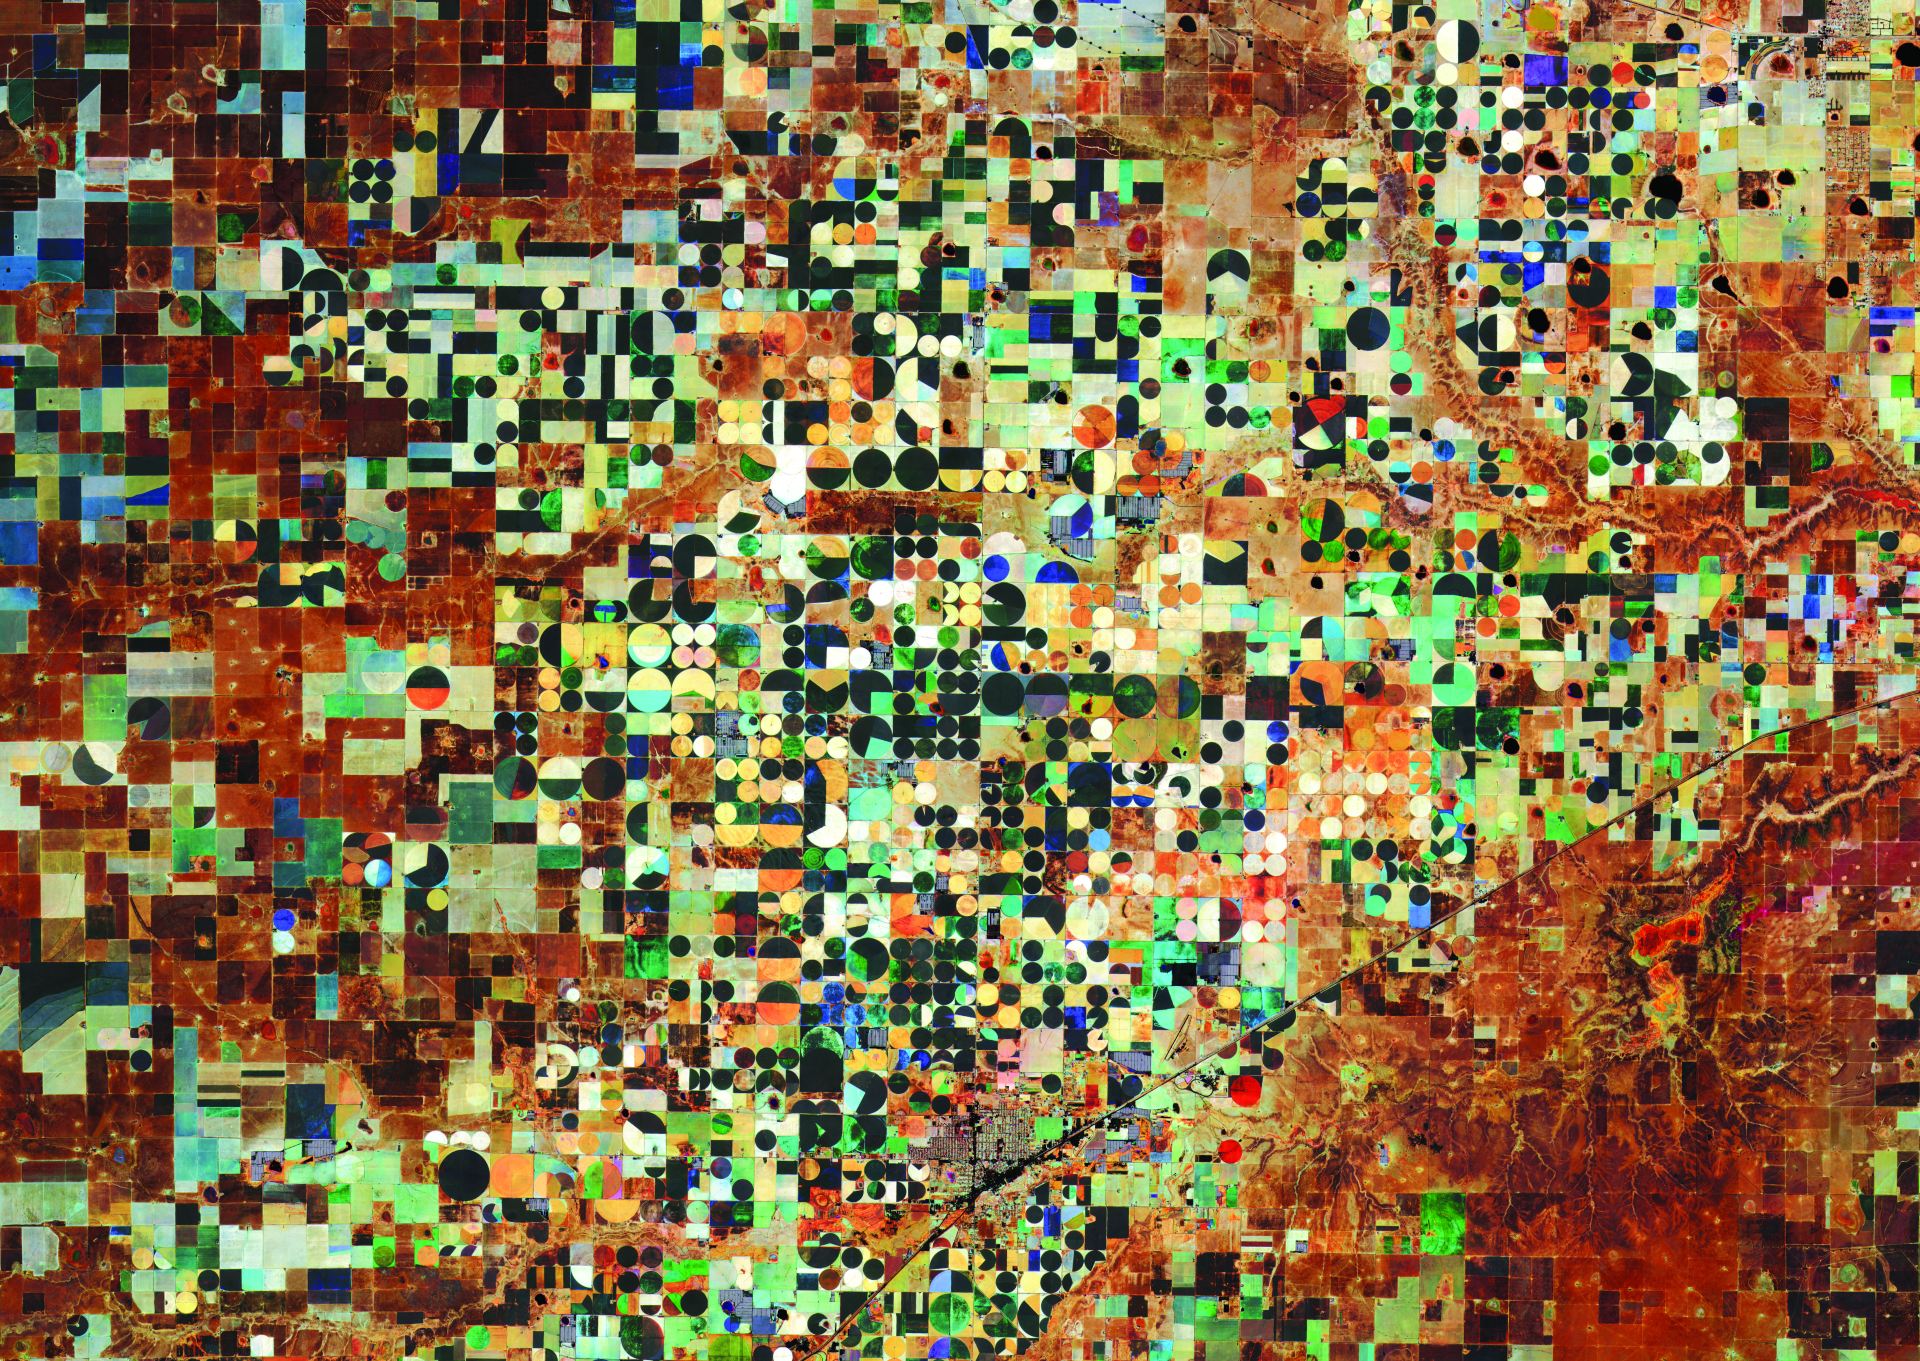 satellite imagery